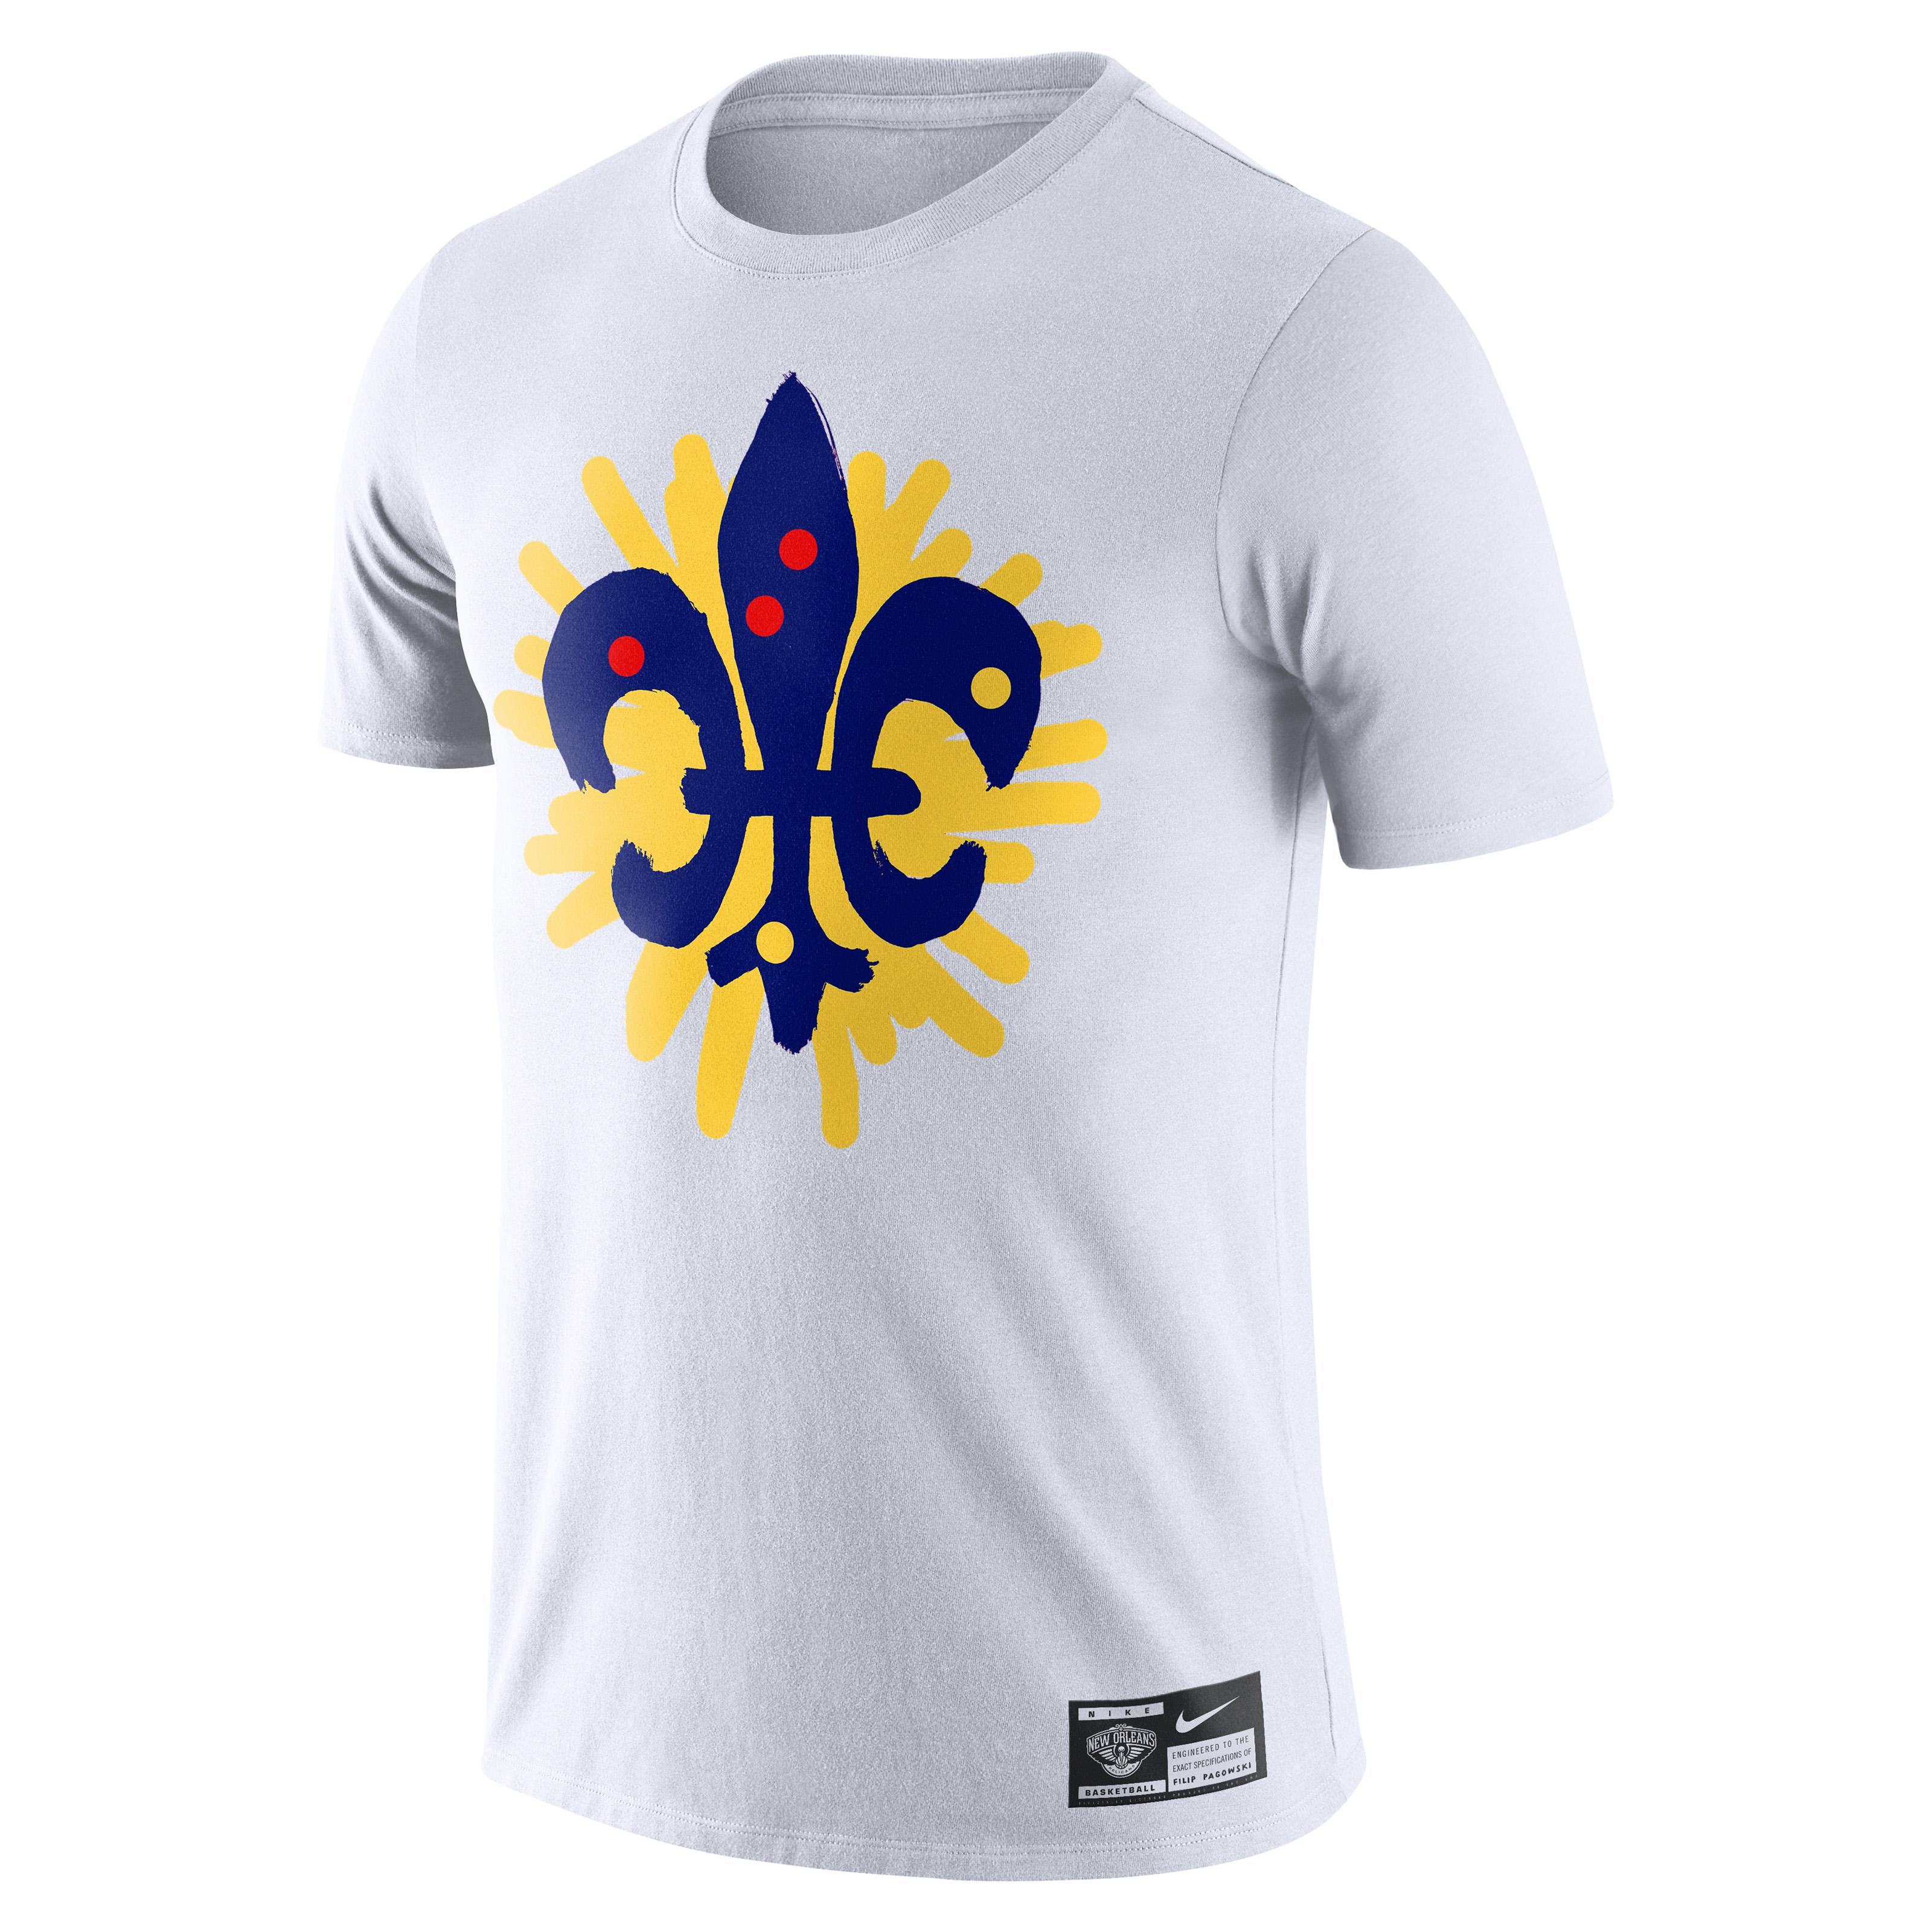 Filip Pagowski Nike T shirt &#x27;New Orleans Pelicans&#x27;